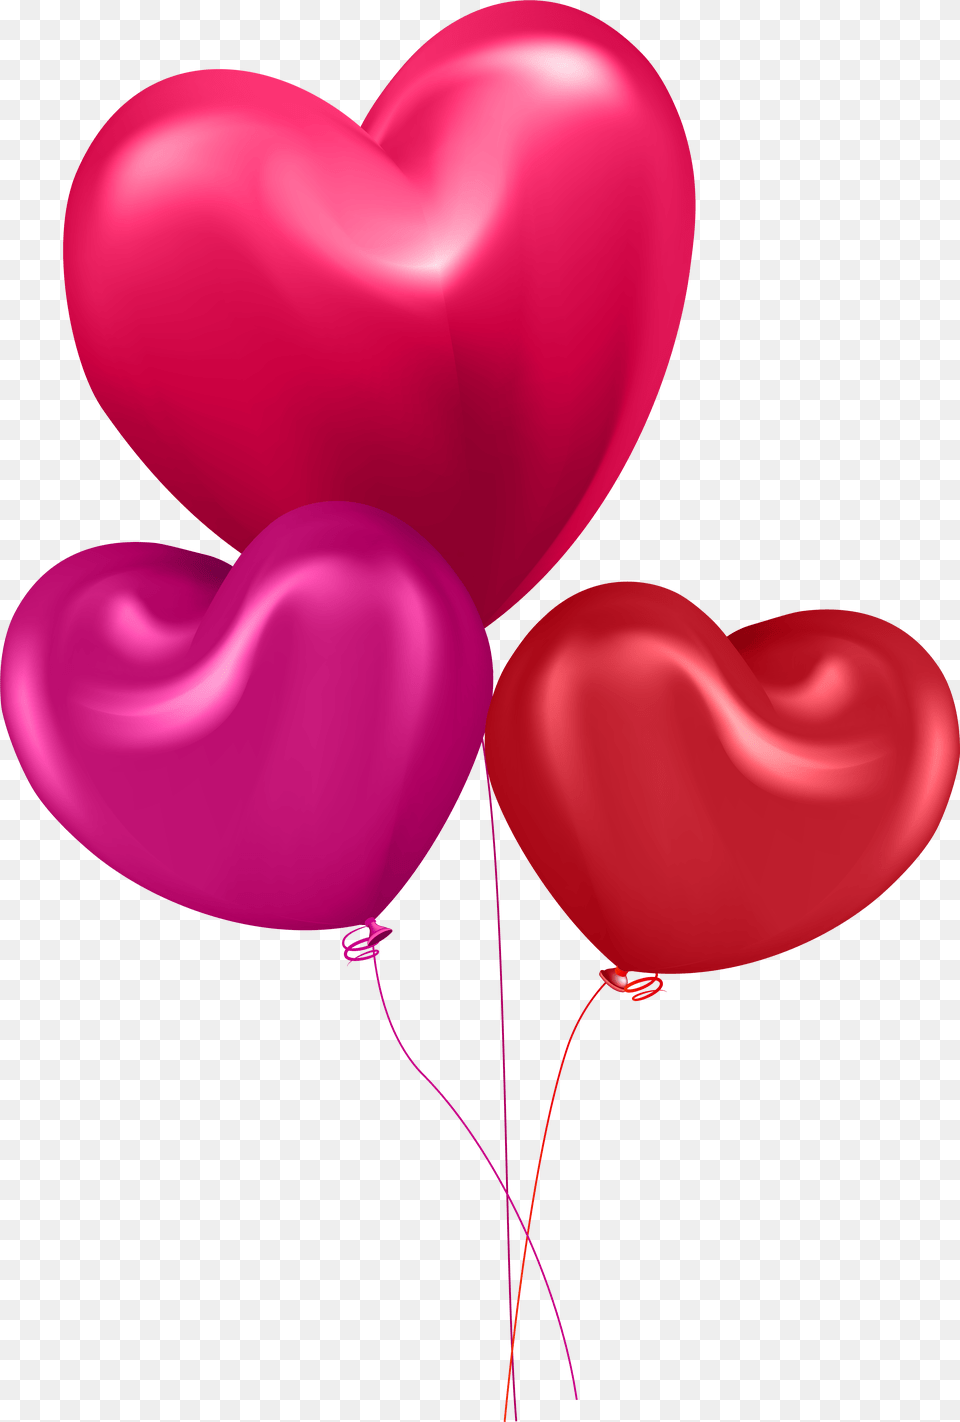 Heart Balloon Clipart Hearts Balloon Heart Balloons Heart Balloons Transparent Background Free Png Download